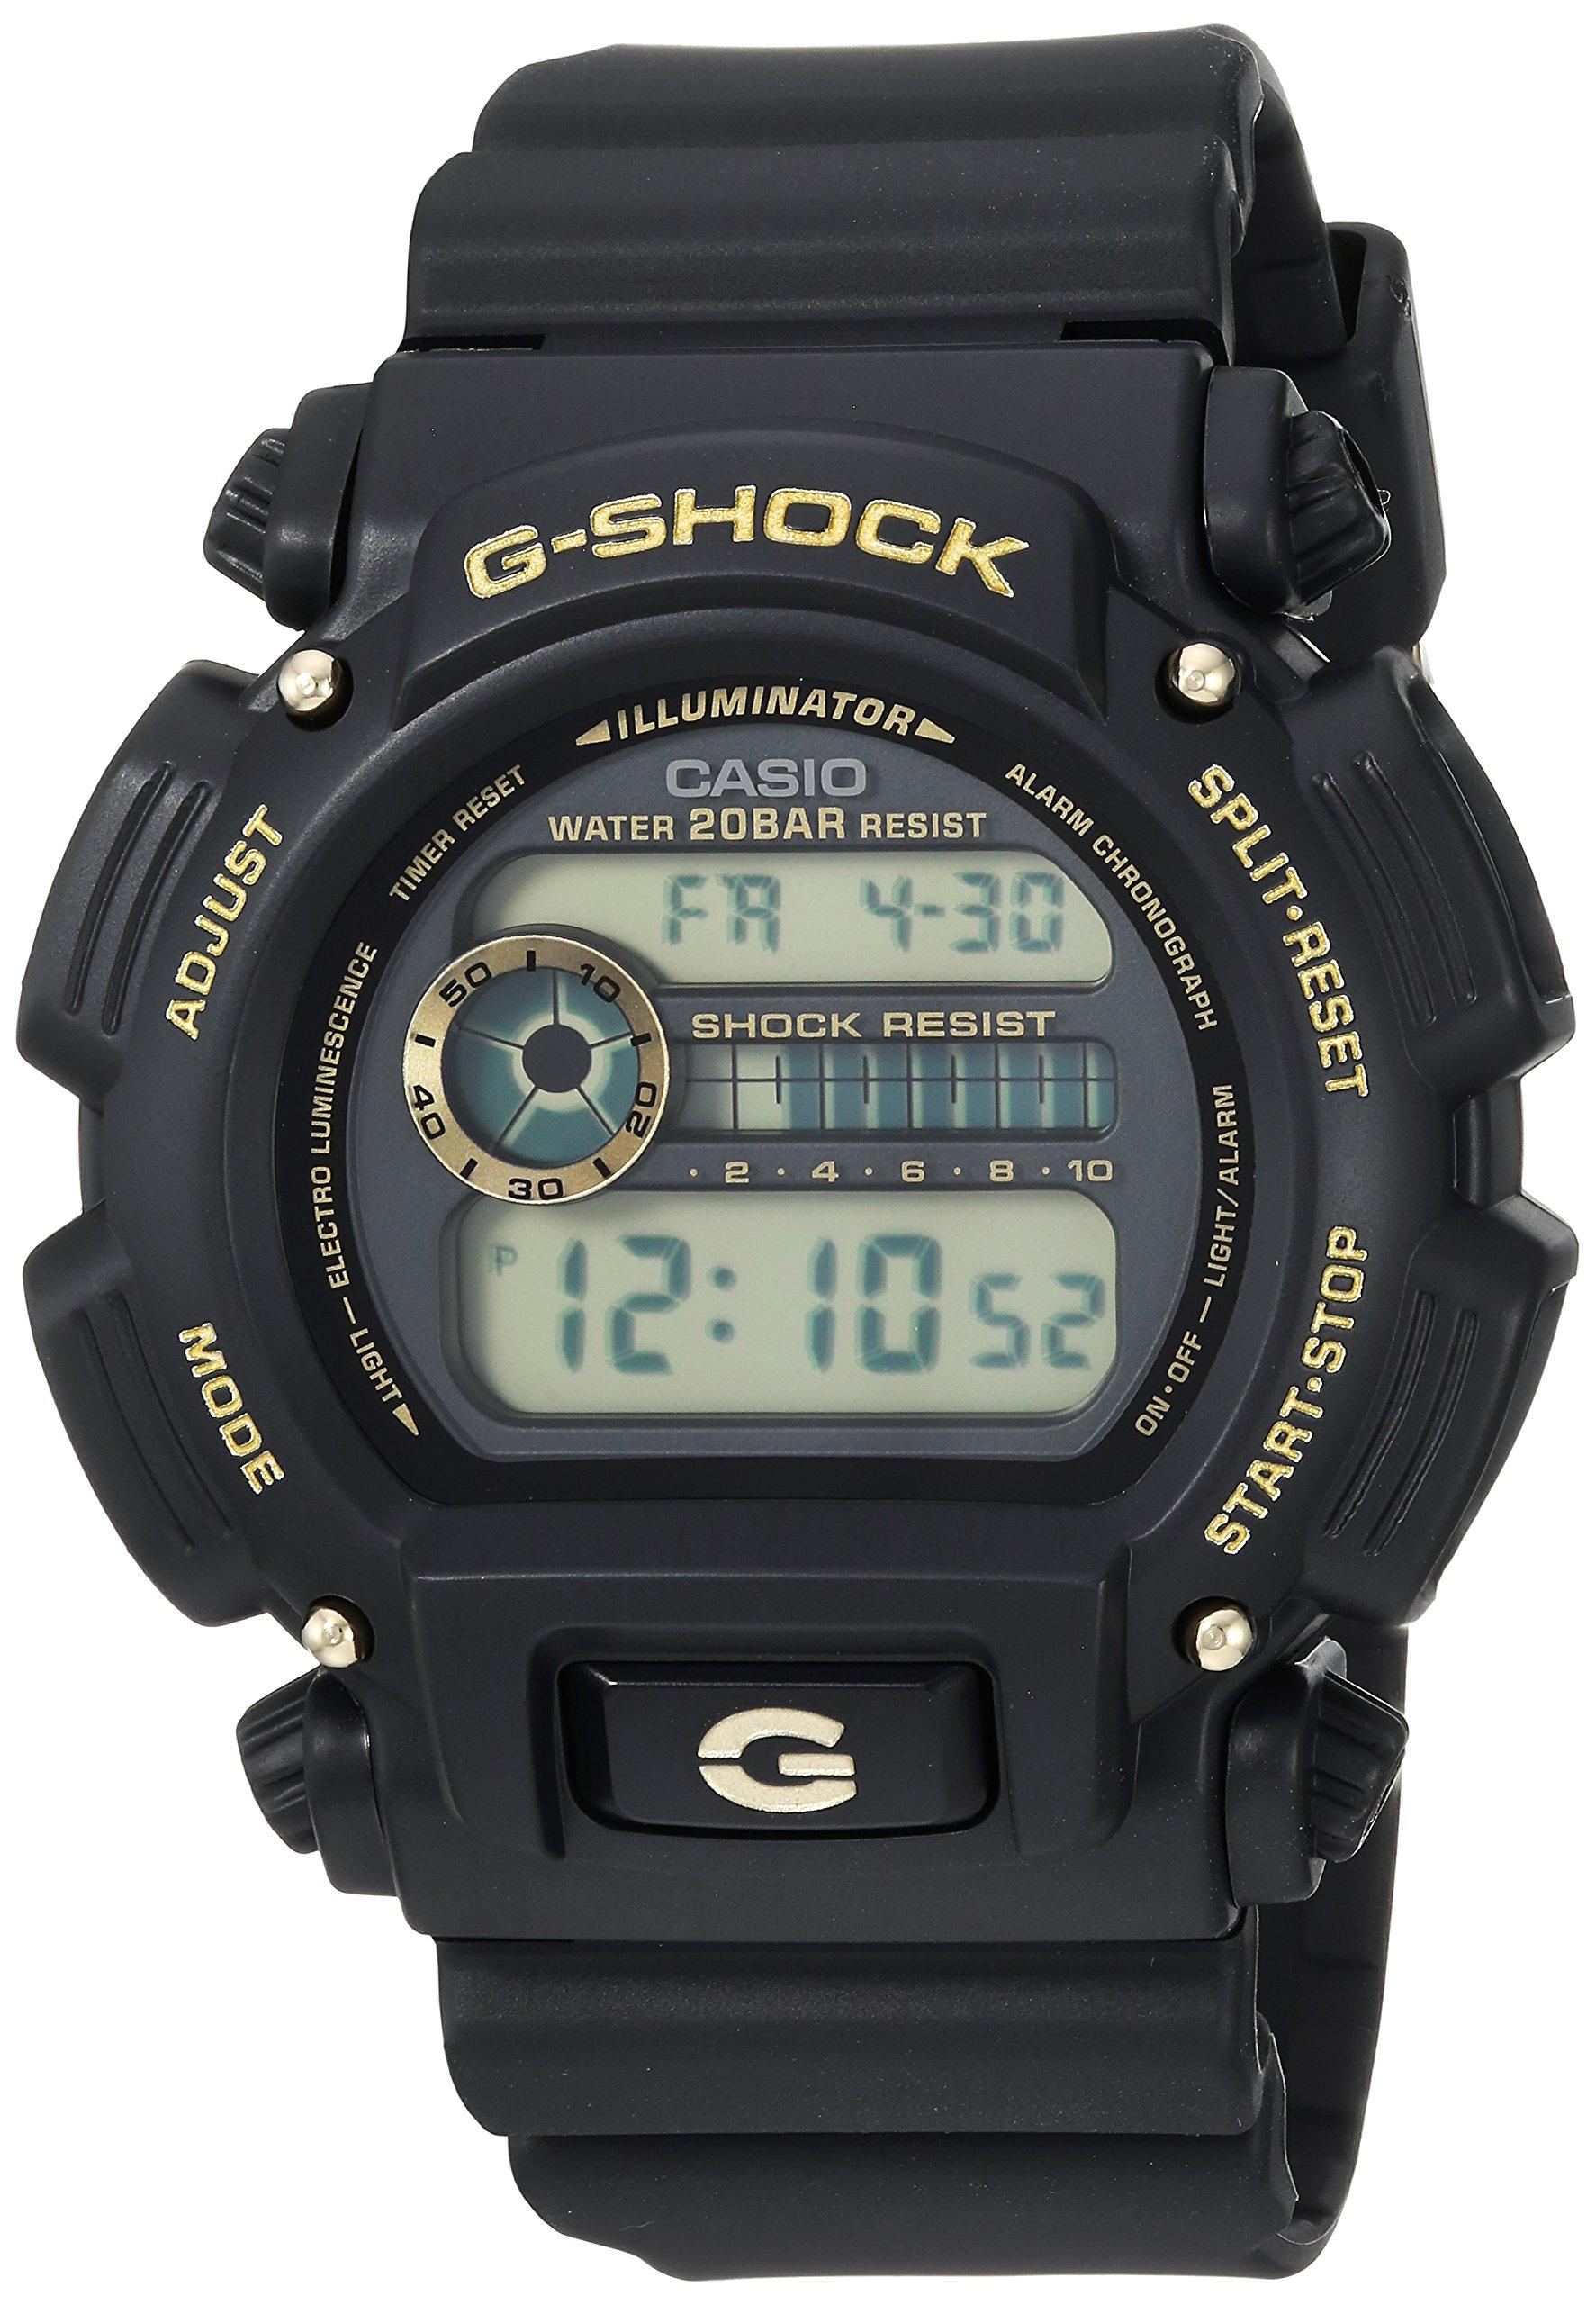 G-Shock G-shock Quartz Watch With Resin Strap in Black/Gold (Black) for ...